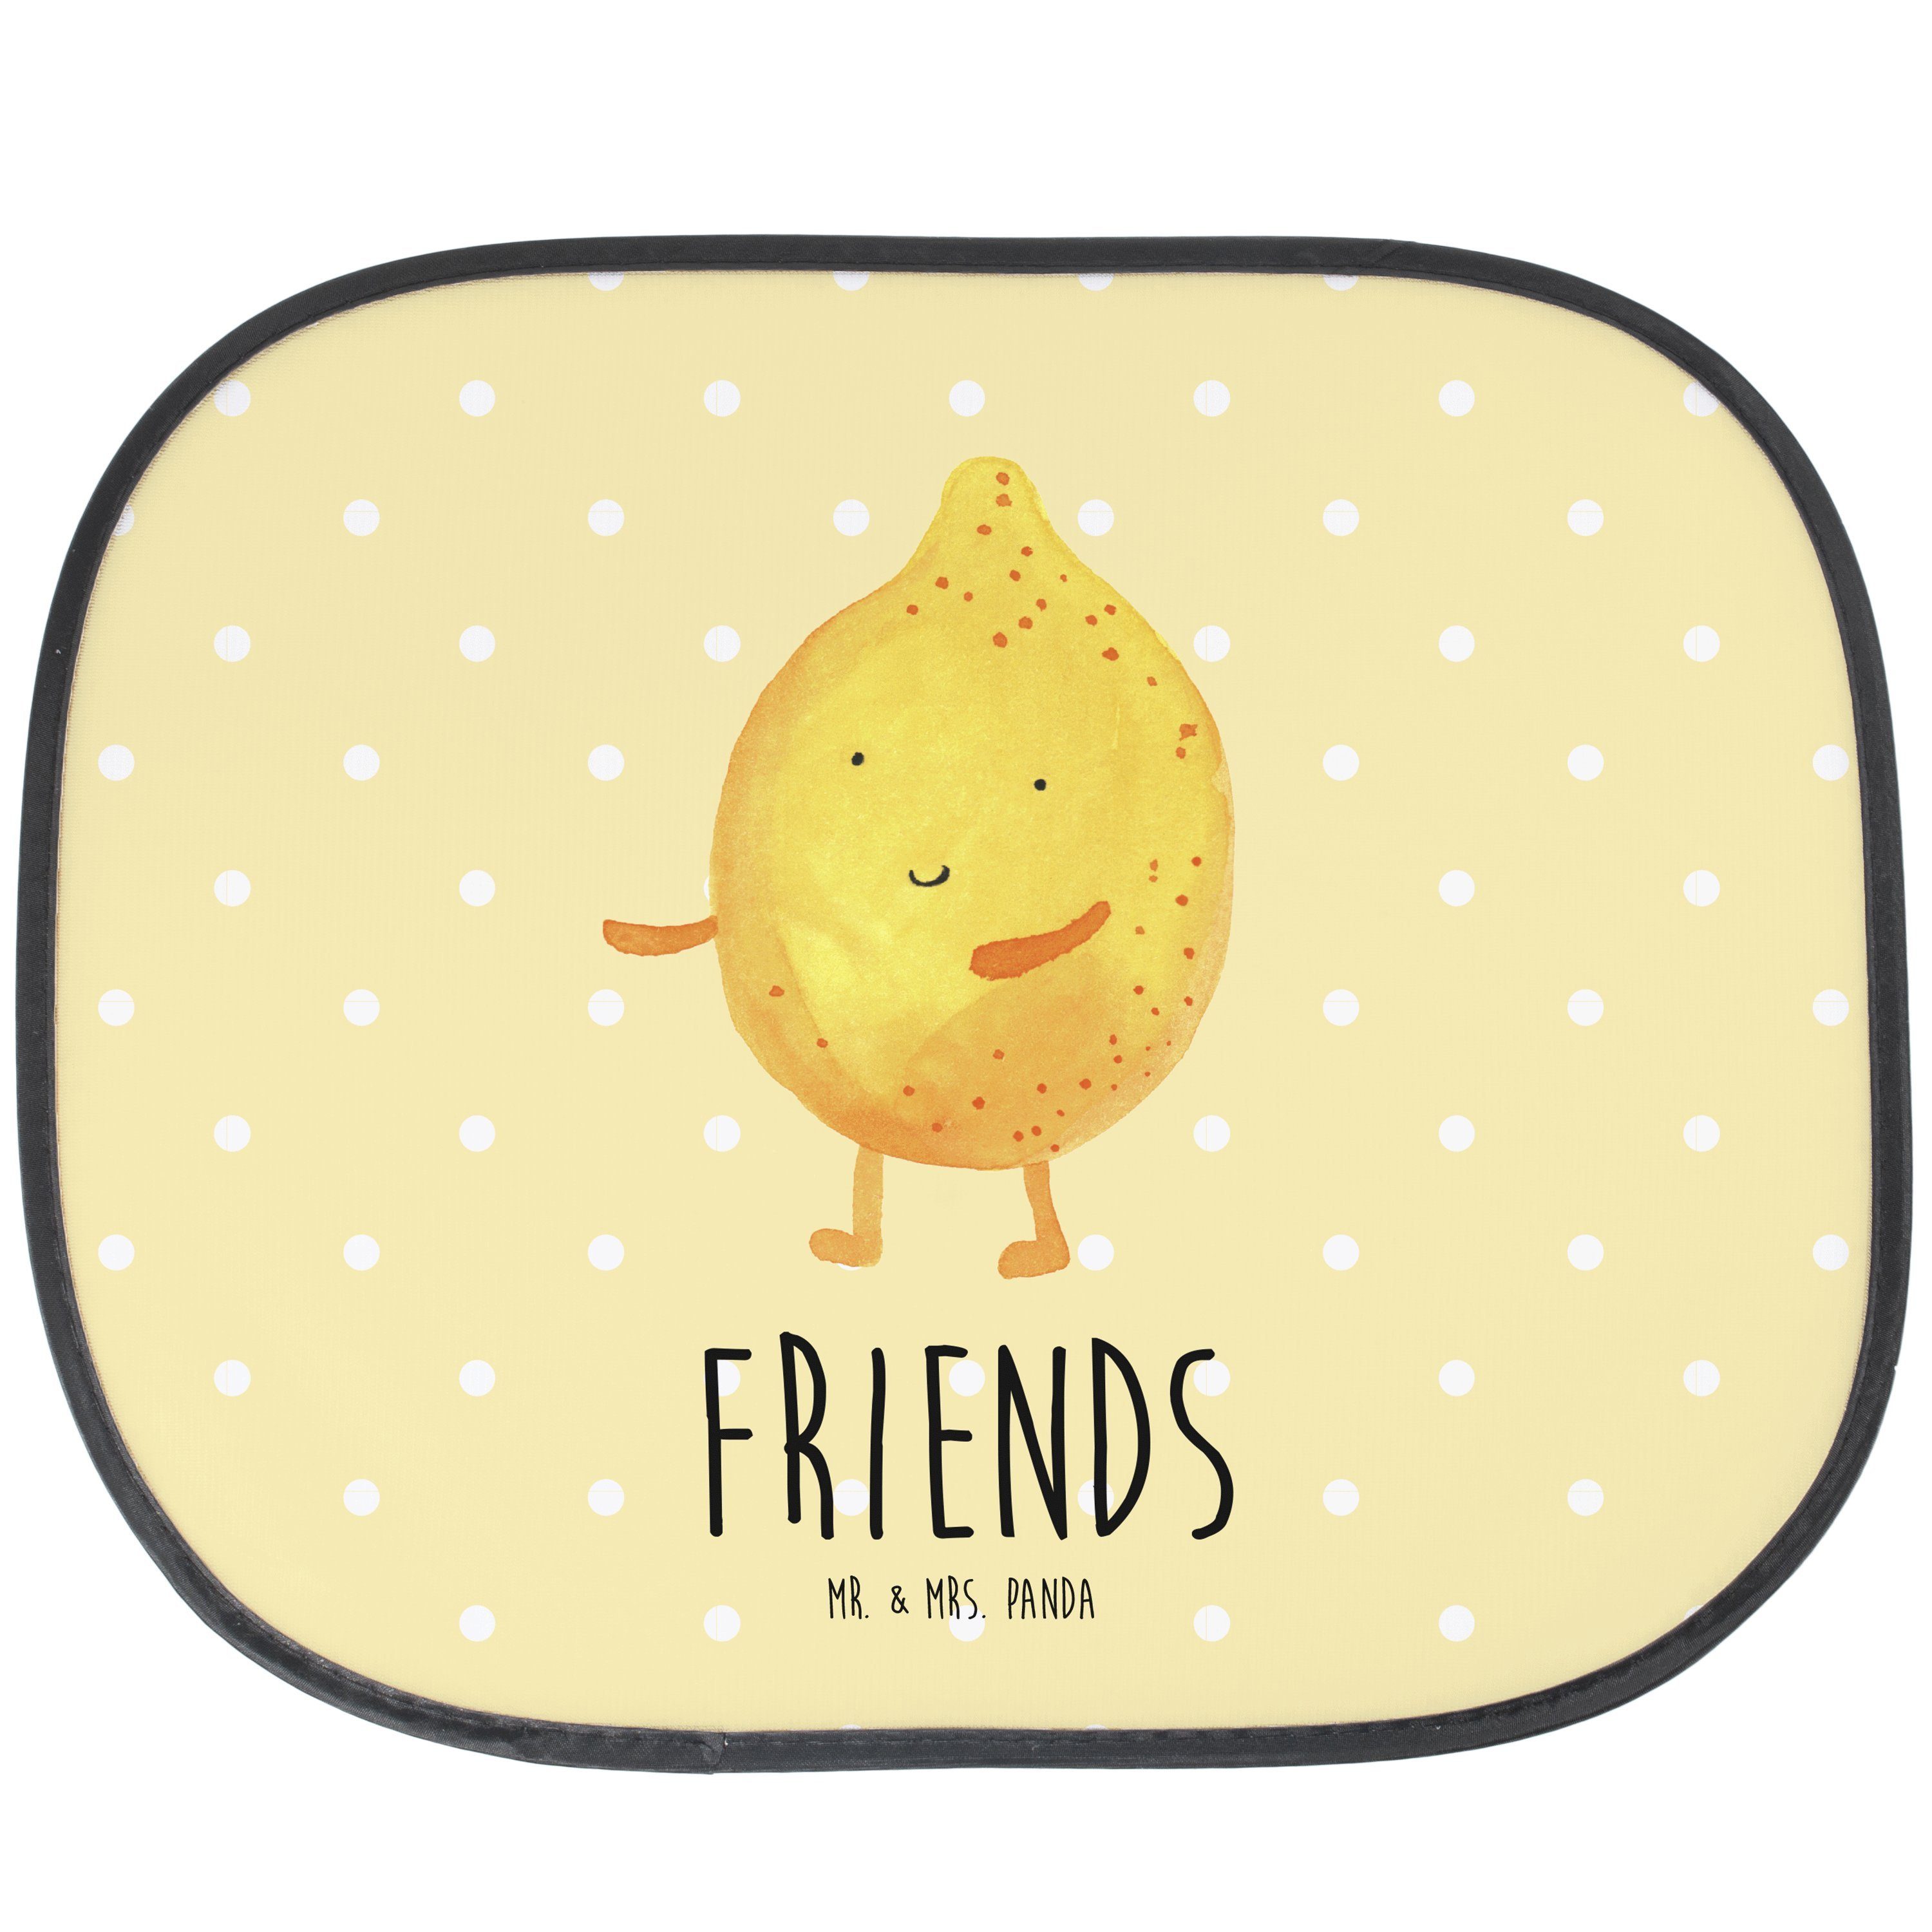 Sonnenschutz BestFriends-Lemon - Gelb Pastell - Geschenk, Sonne, Sonnenschutz Kind, Mr. & Mrs. Panda, Seidenmatt